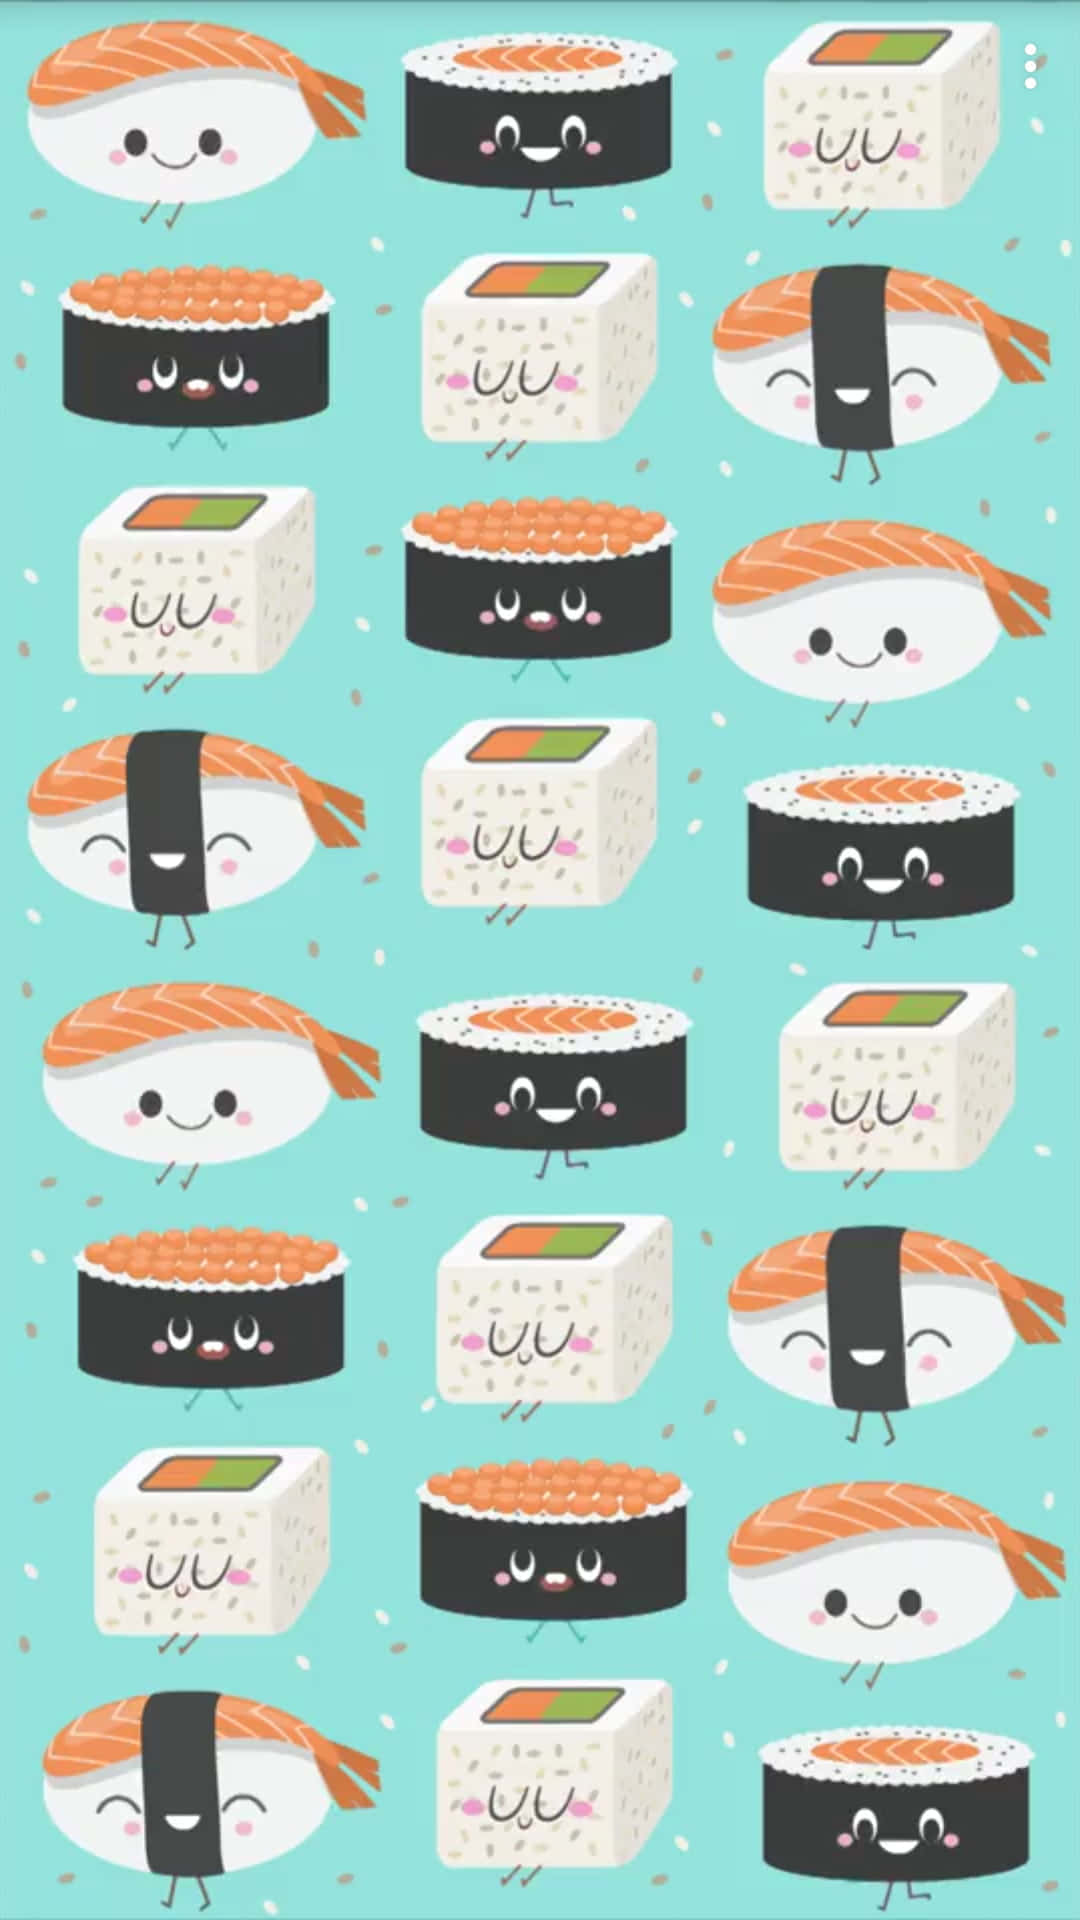 "Deliciously Adorable - A Showcase of Cute Food Art" Wallpaper